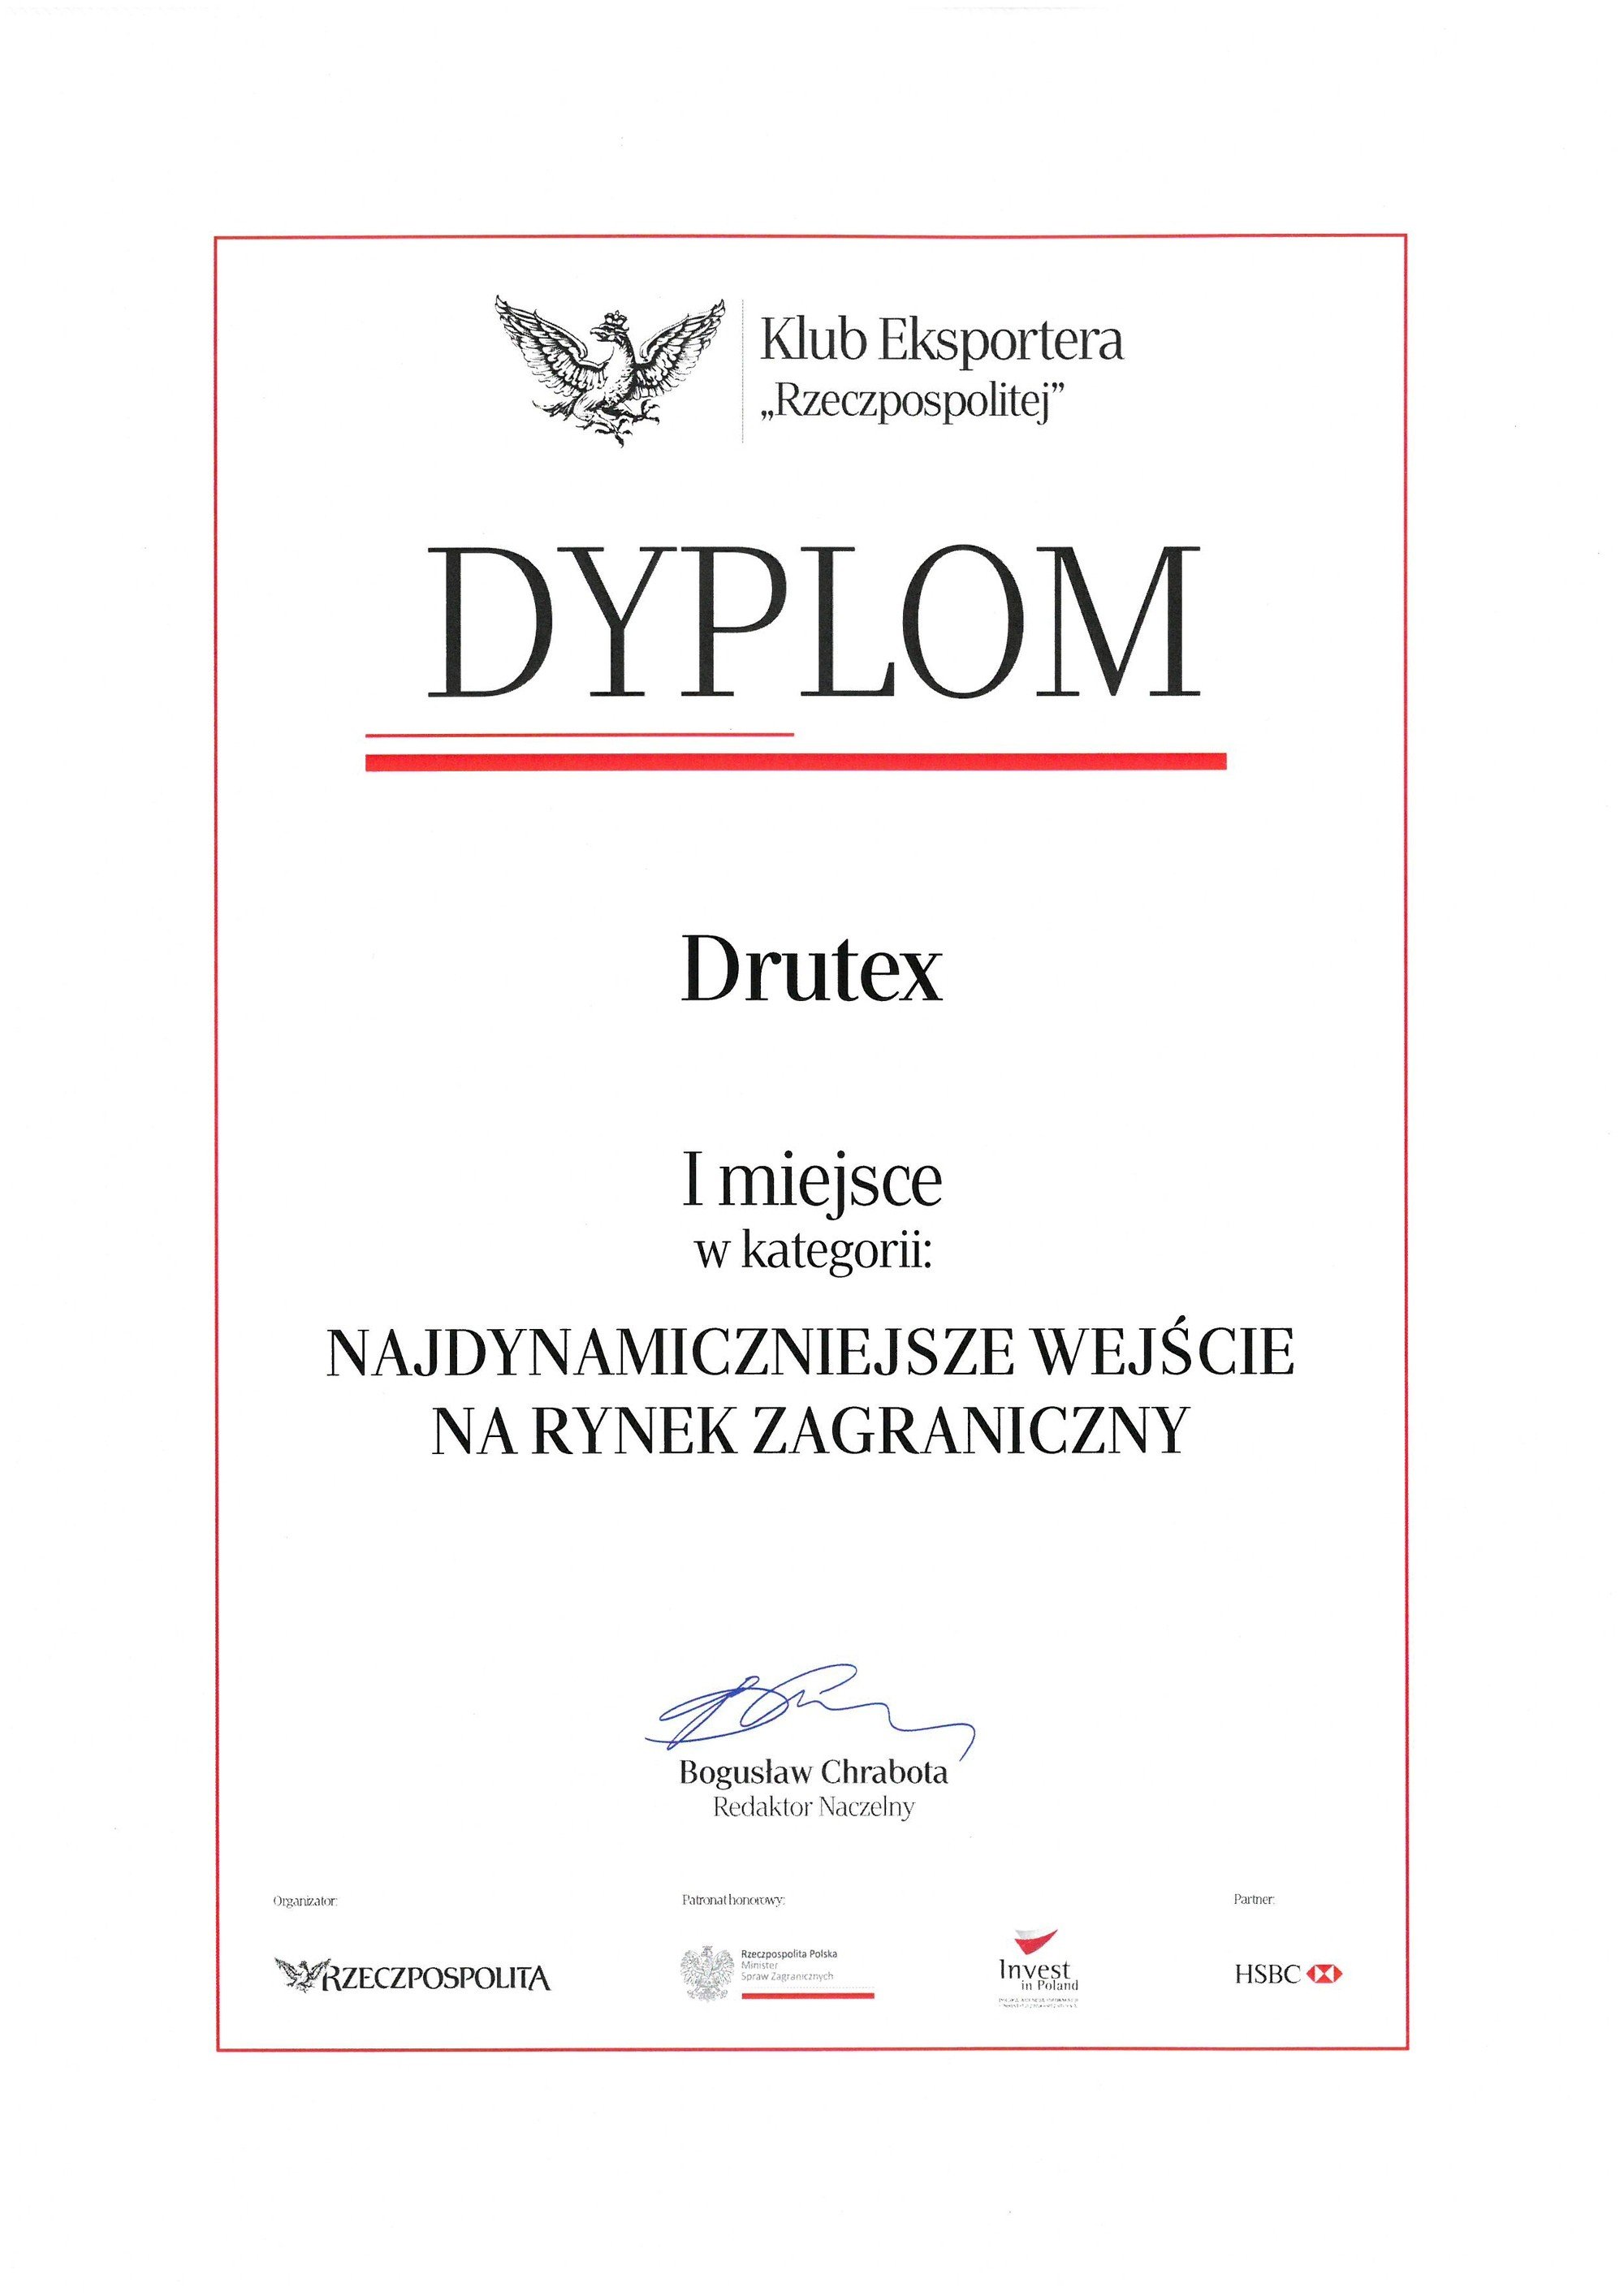 DRUTEX wins the Rzeczpospolita daily competition! 